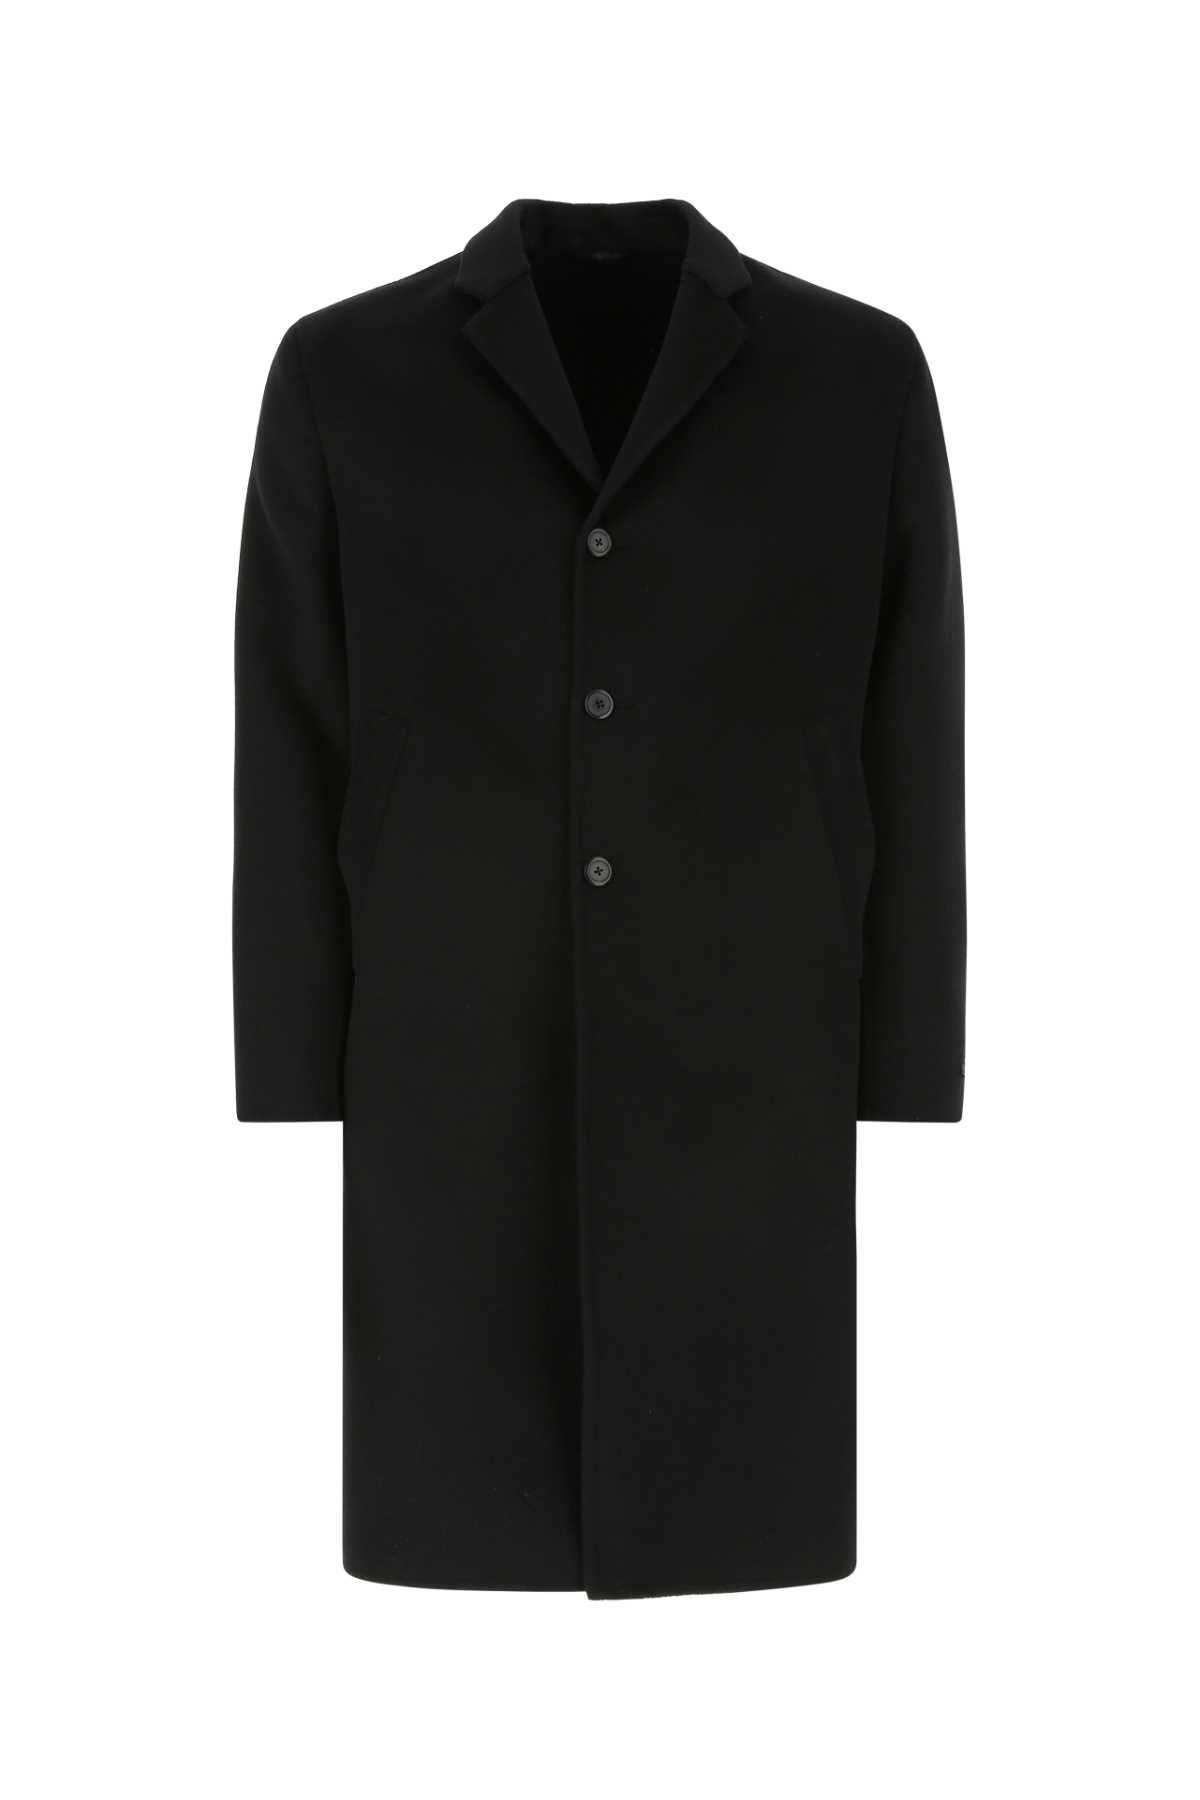 Prada Black Wool Blend Coat